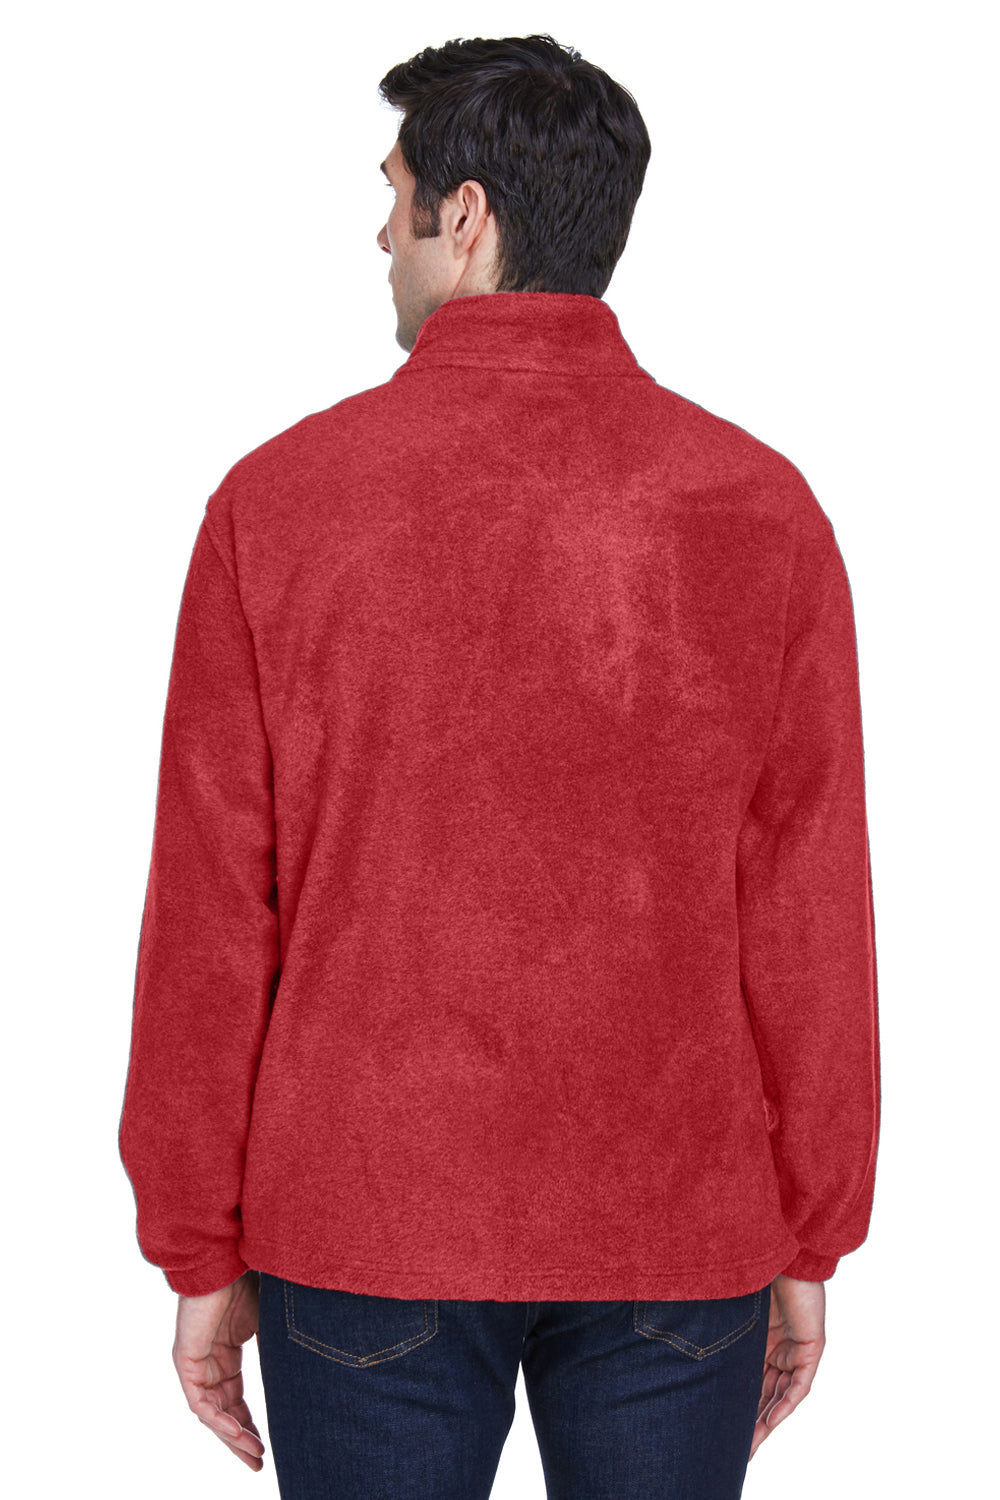 Harriton M990 Mens Full Zip Fleece Jacket Red Back